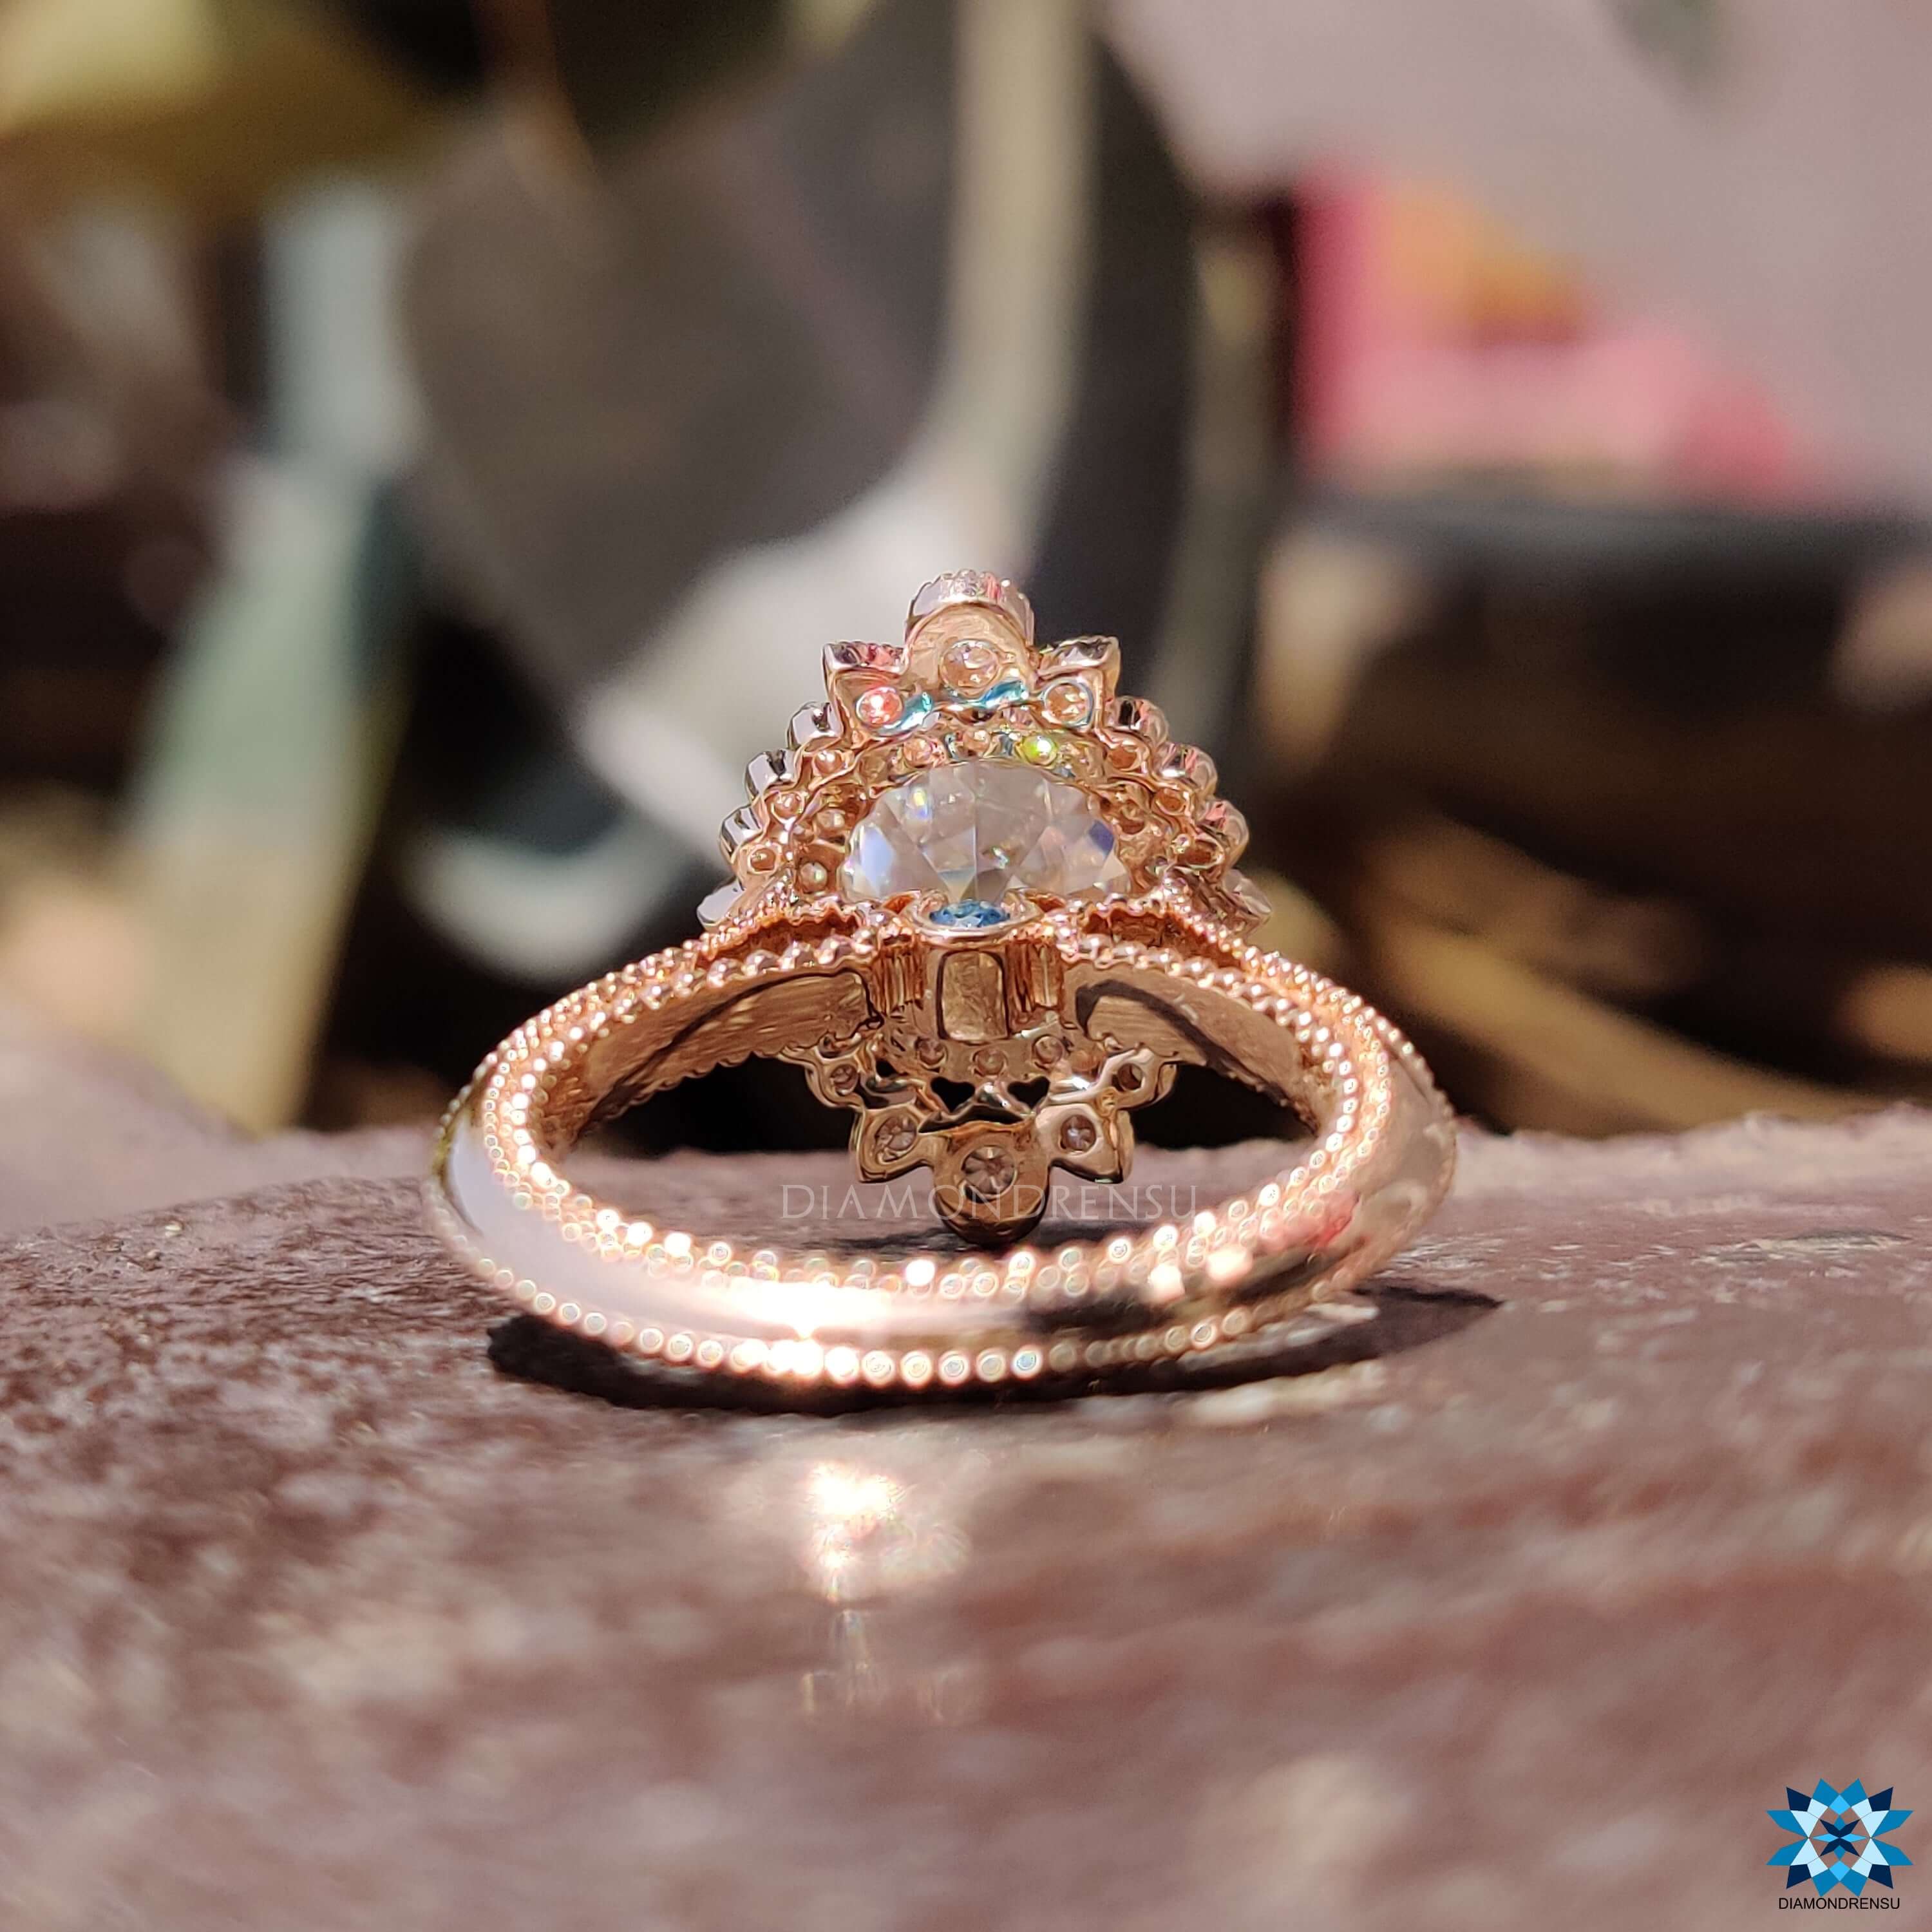 Antique Engagement Ring 0.61ct Old European Cut Diamond Edwardian Engagement  Ring 18K White Gold Heart Motif Filigree Antique Wedding Ring - Etsy